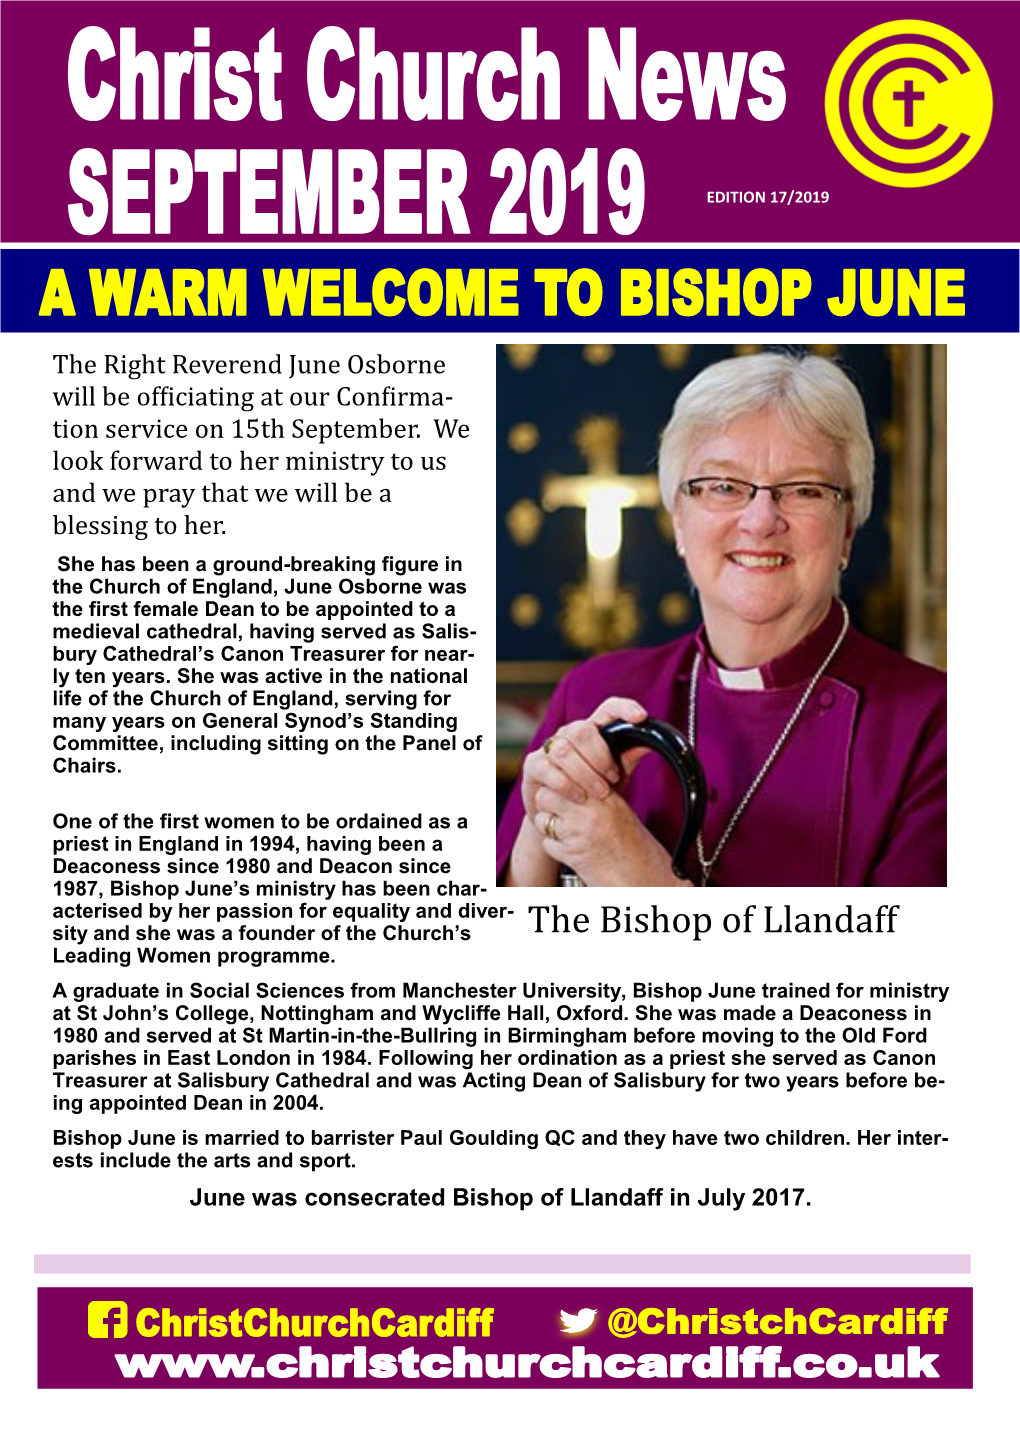 The Bishop of Llandaff Leading Women Programme